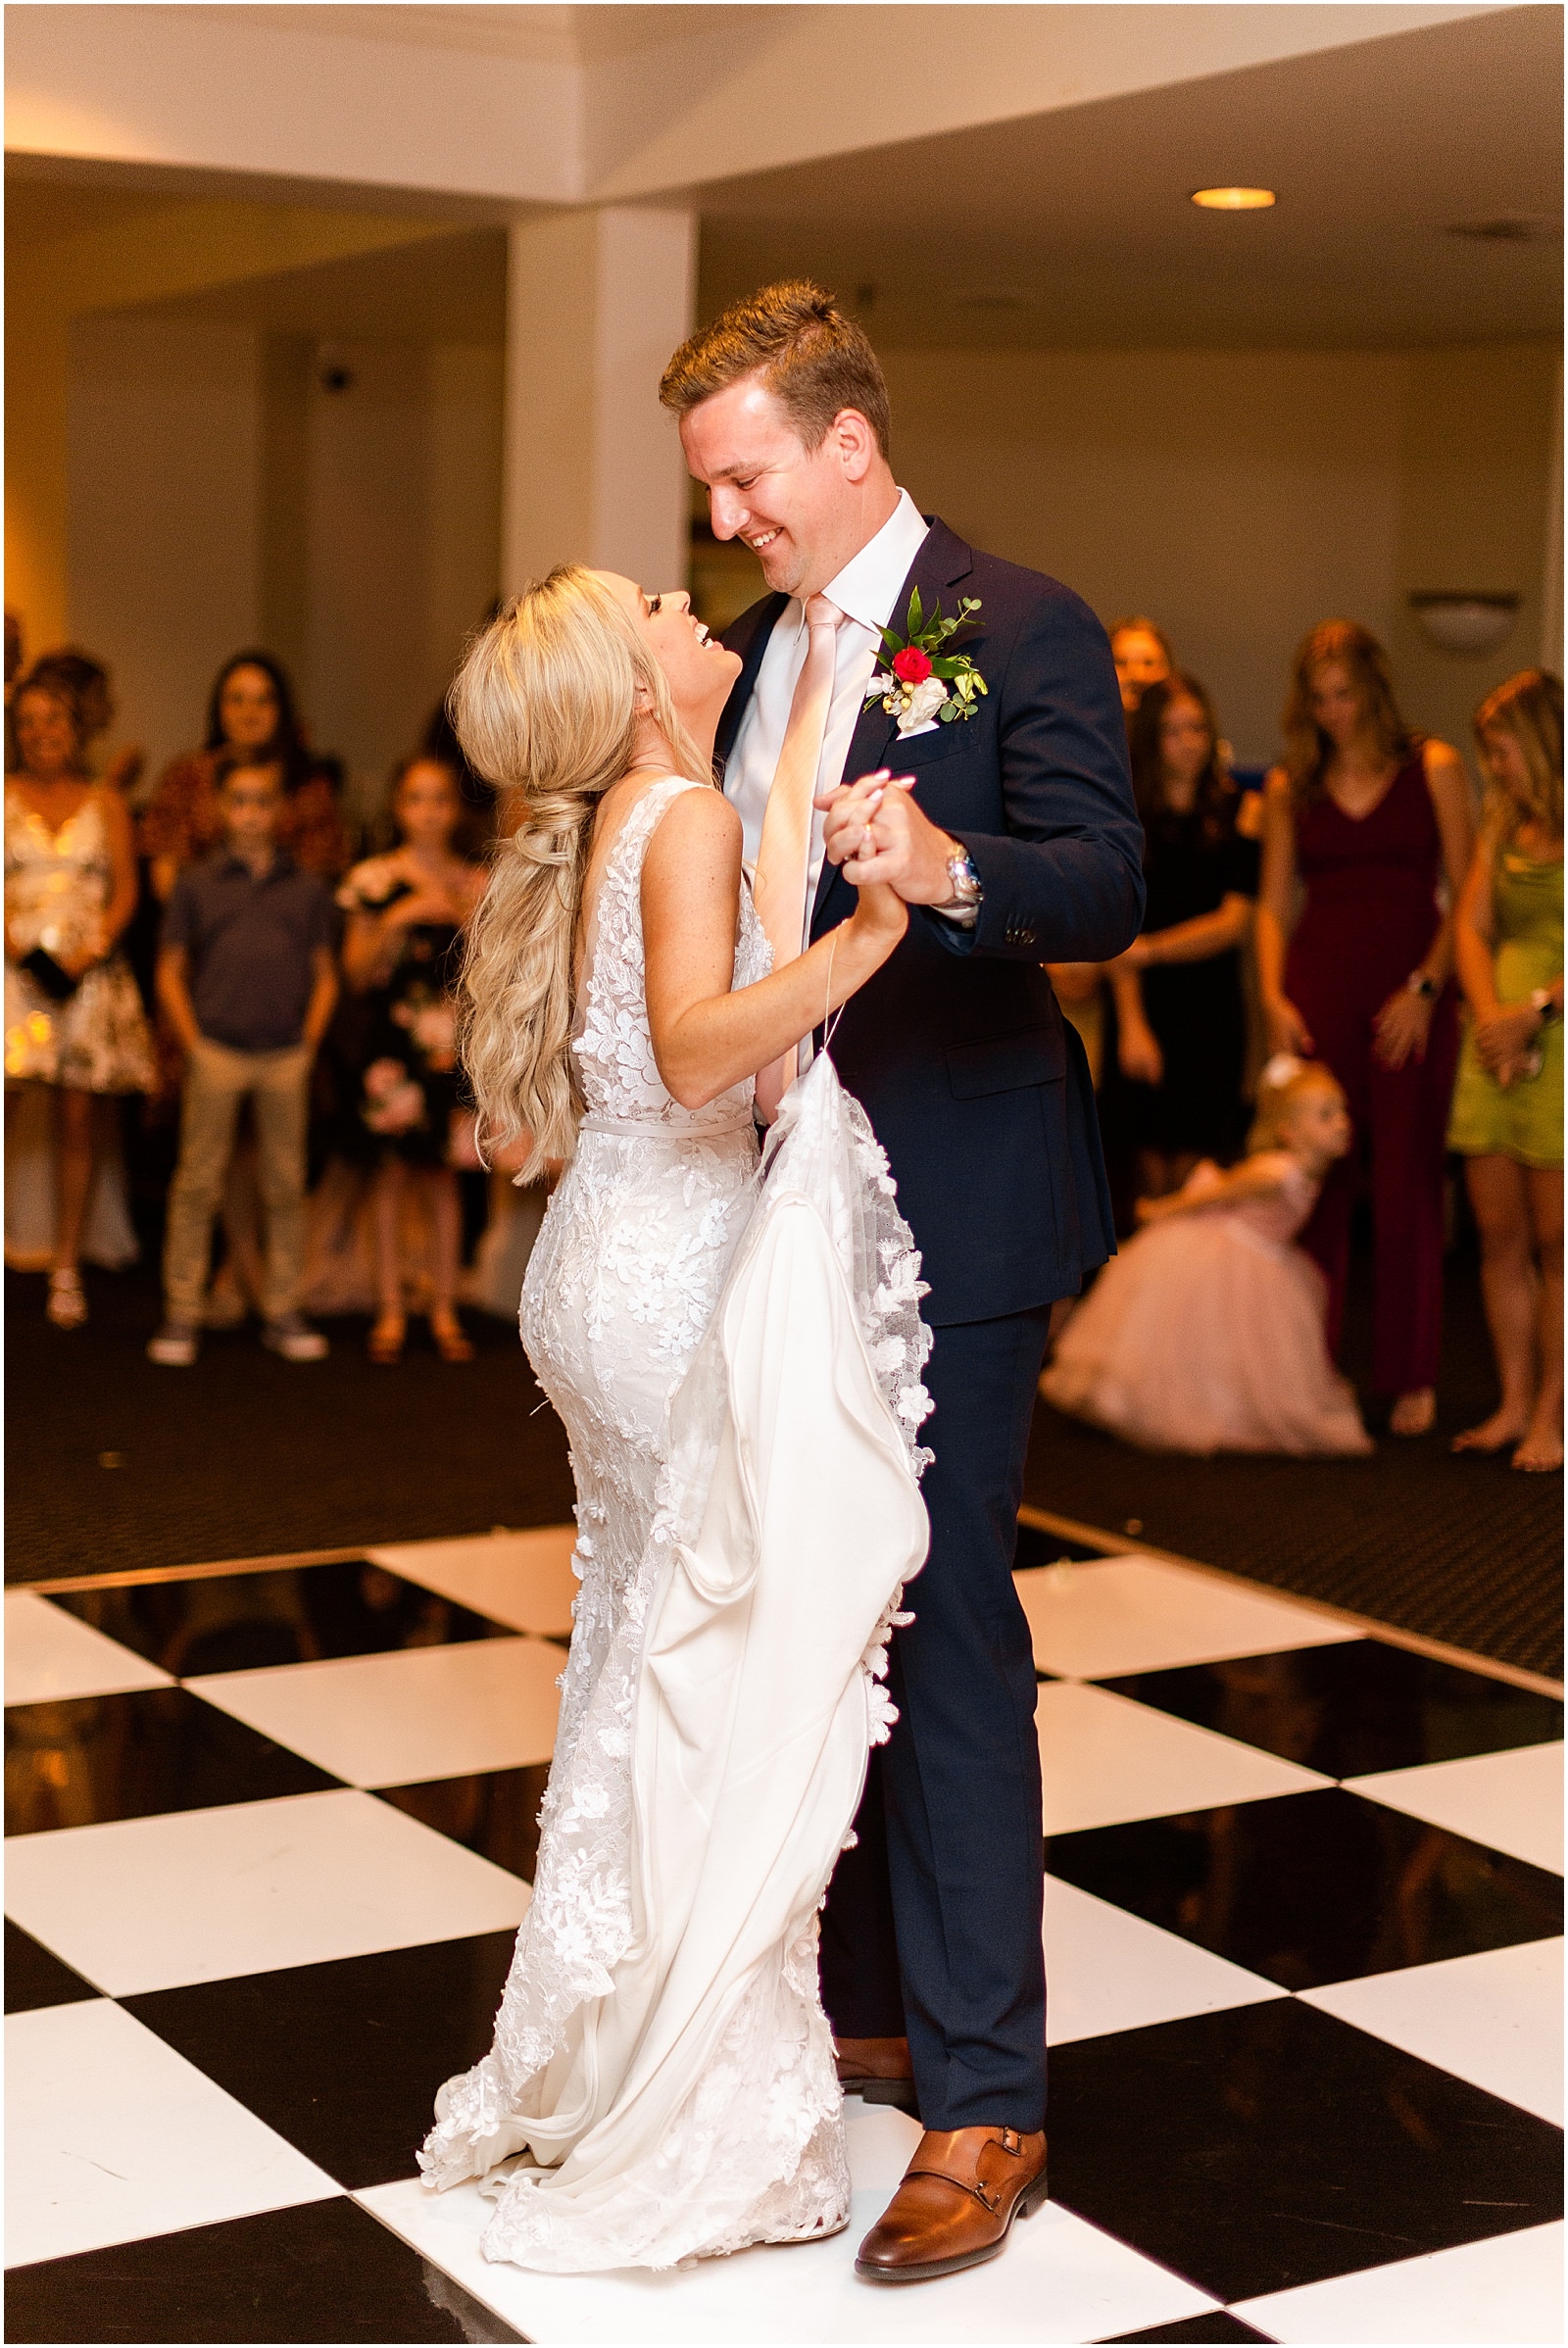 An Evansville Country Club Wedding | Madison and Christiaan | Bret and Brandie | Evansville Photographers | @bretandbrandie-0185.jpg